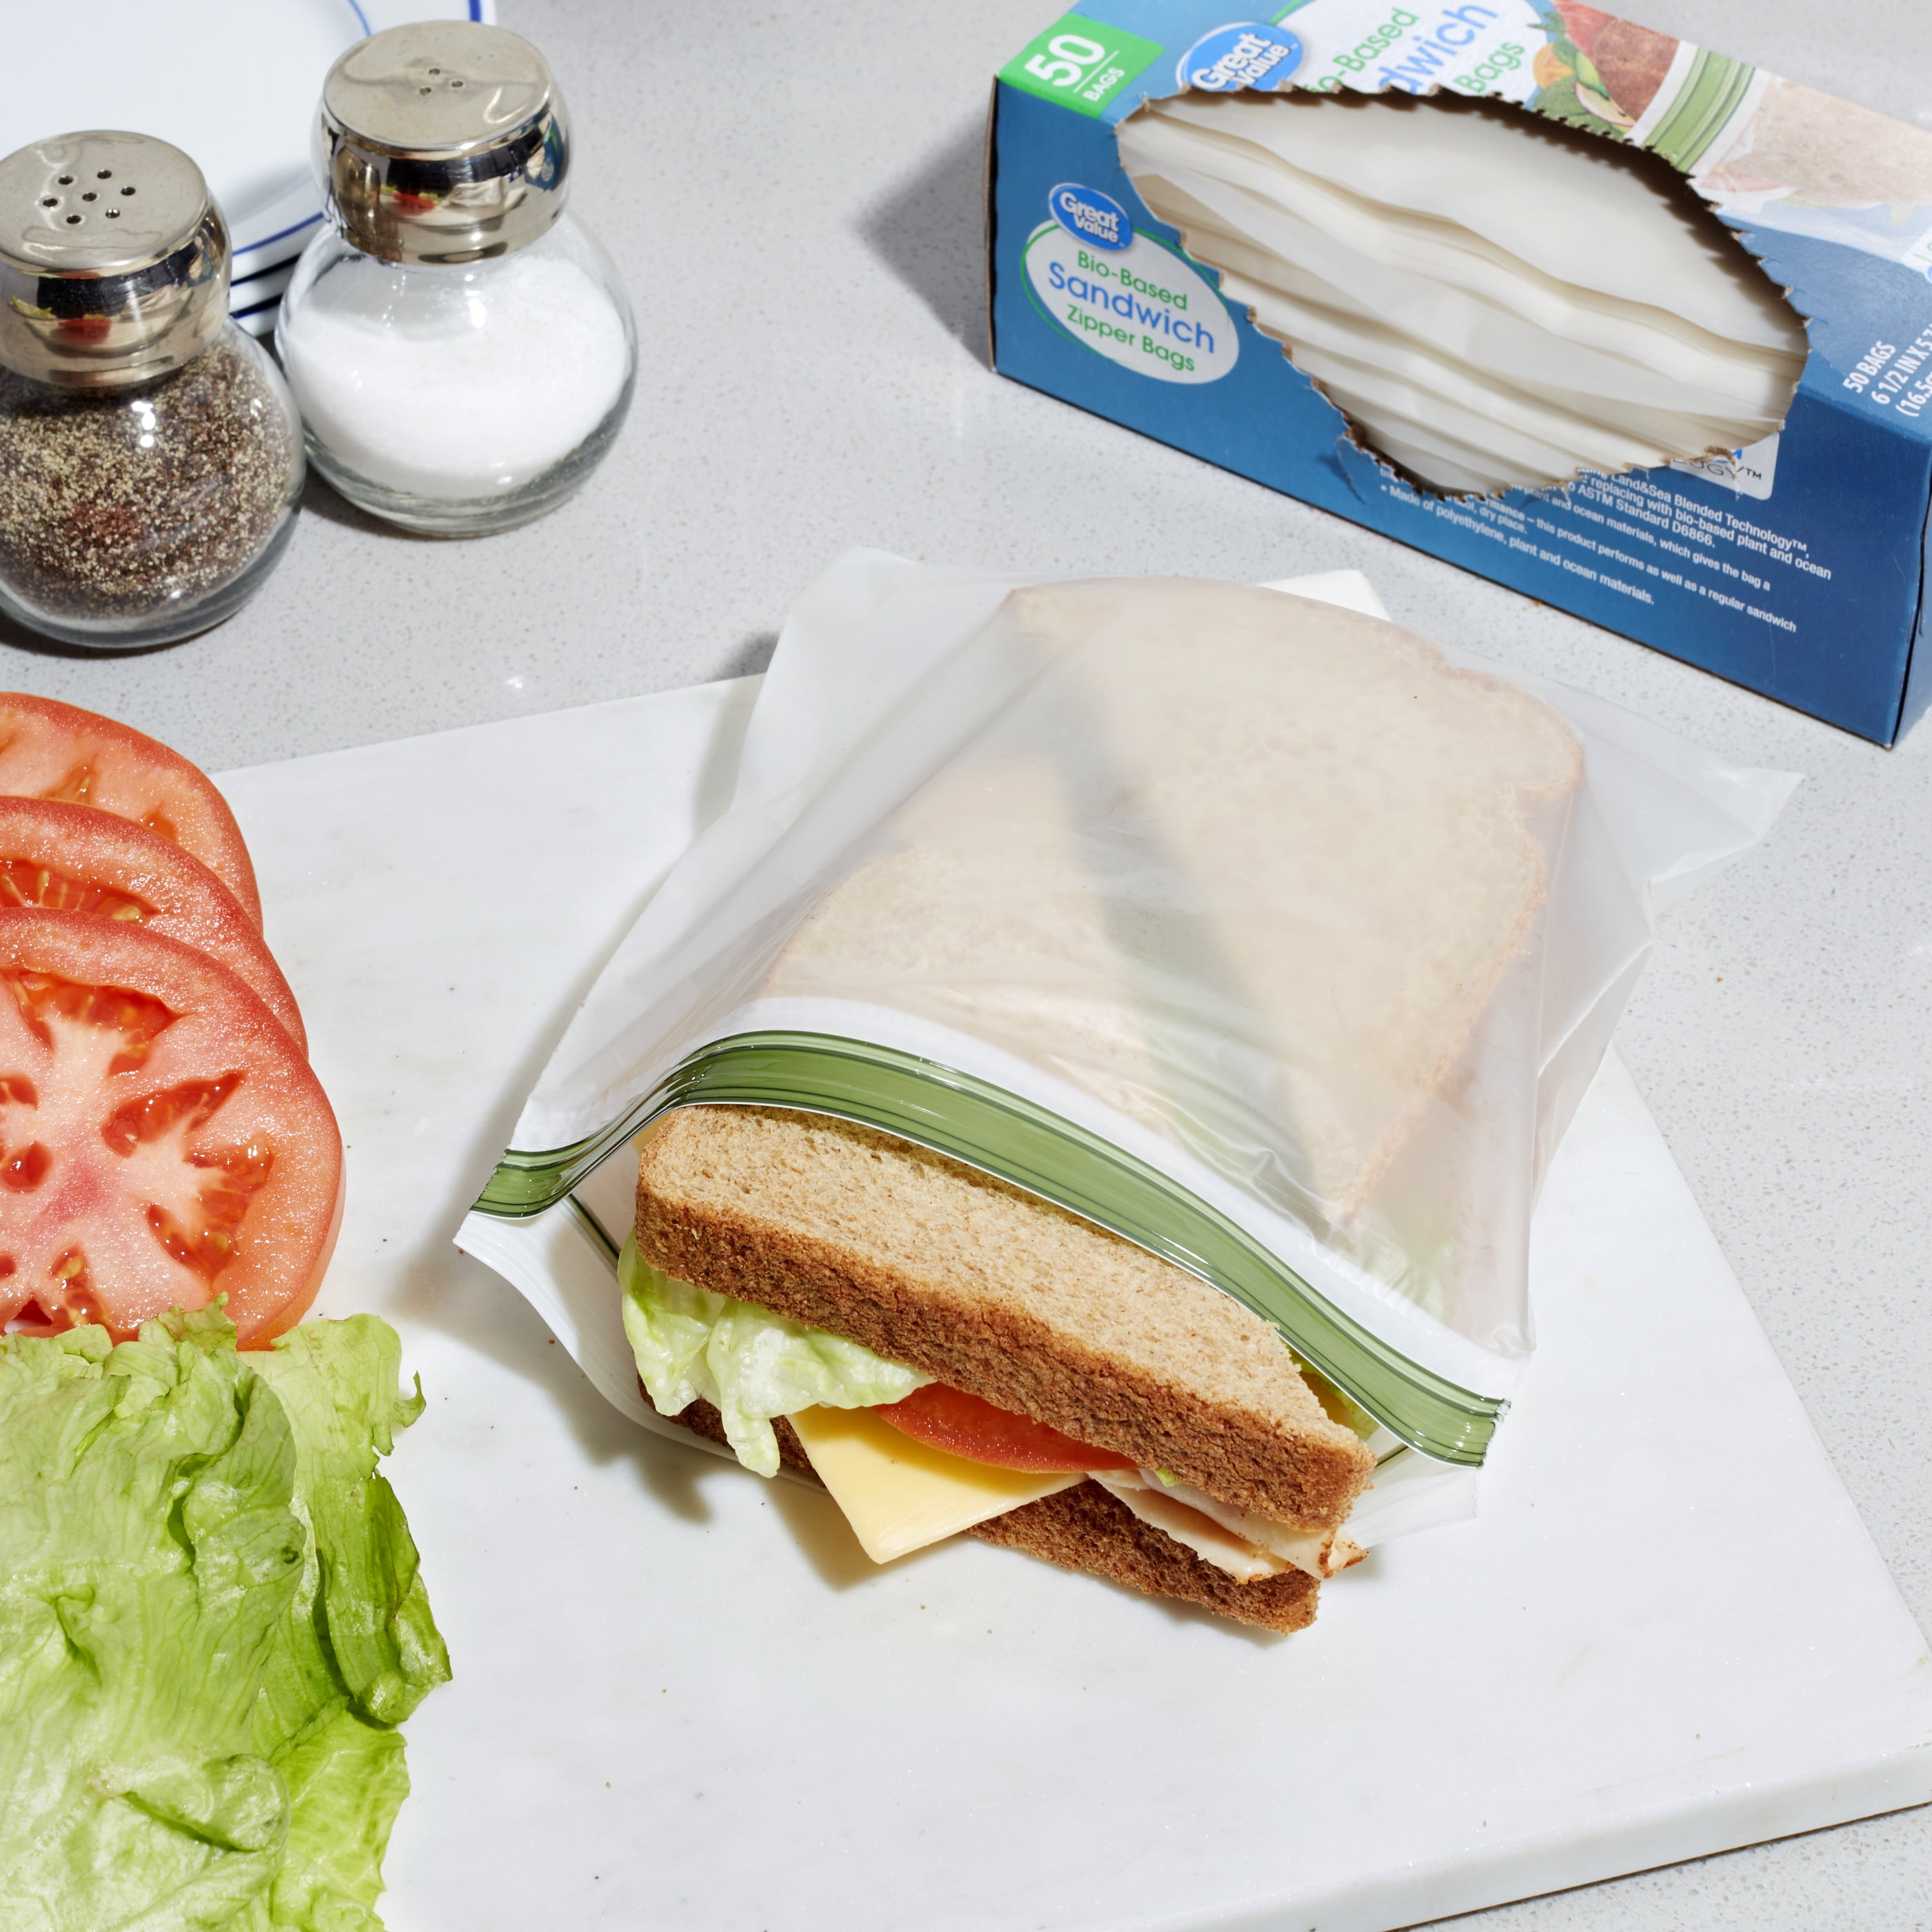 sandwich bags s/25, ziplock compostable - Whisk